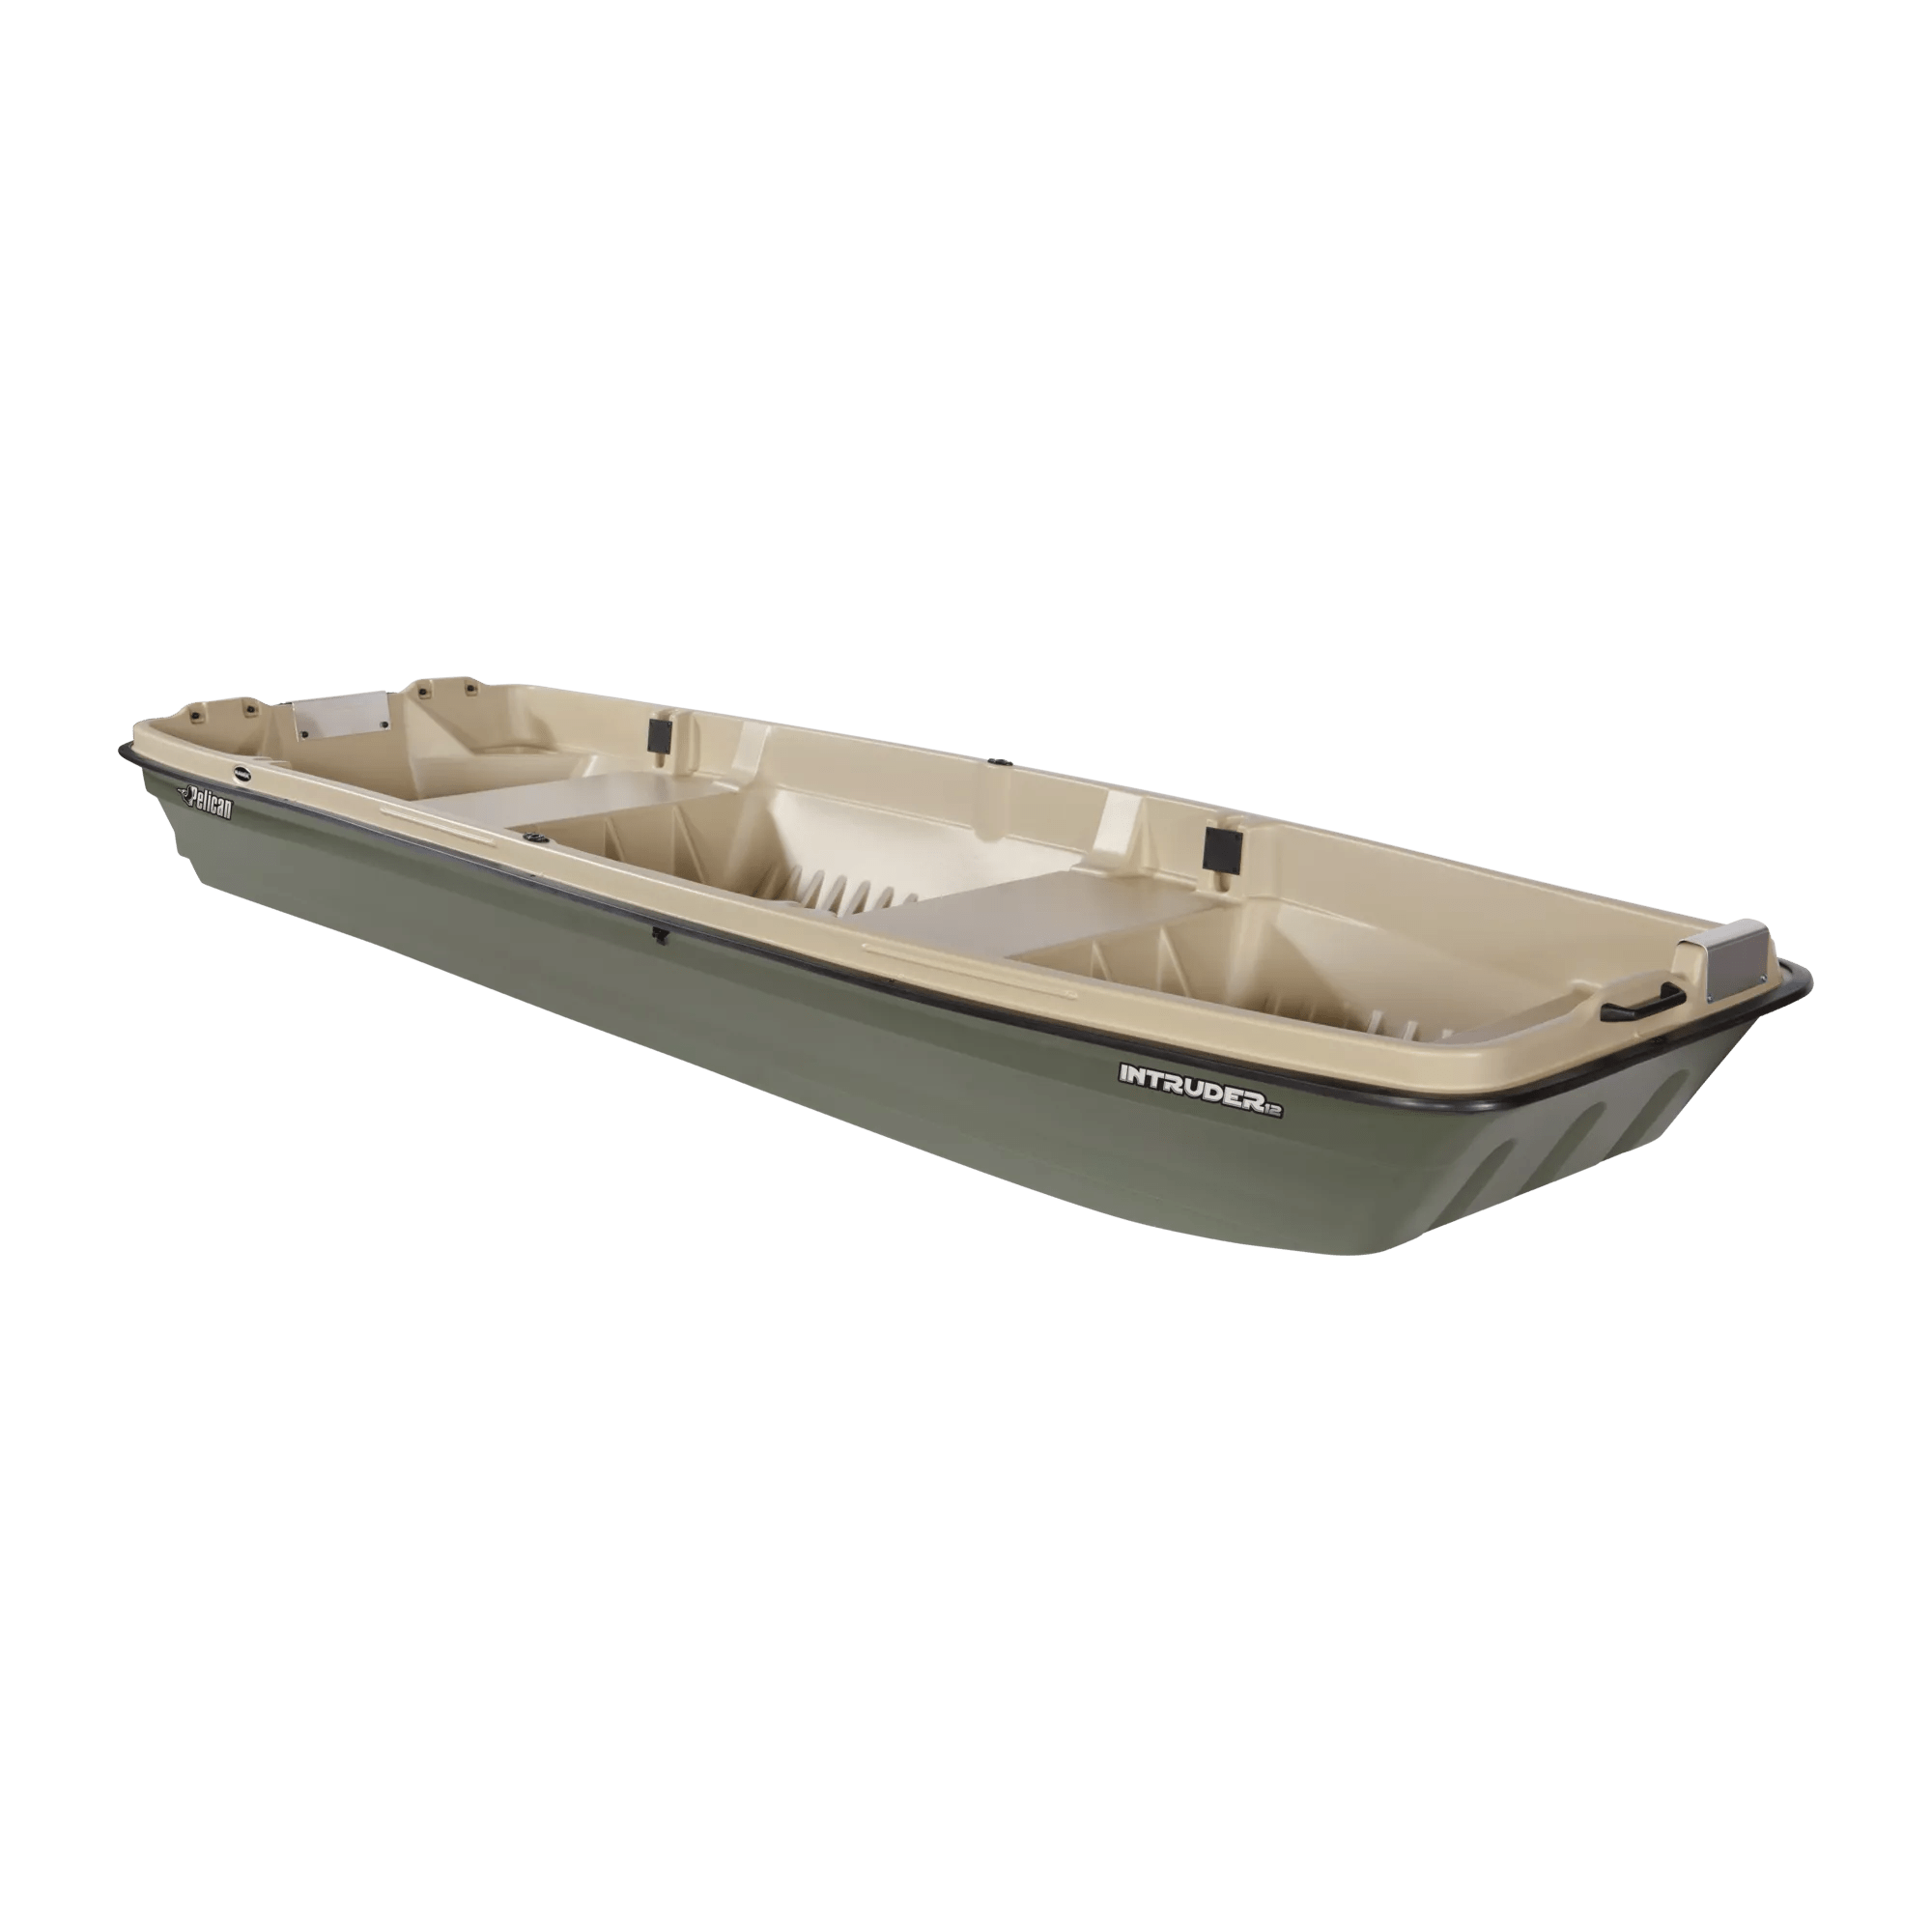 PELICAN - Intruder 12 Fishing Boat - Discontinued color/model - Green - BJA12P100 - ISO 